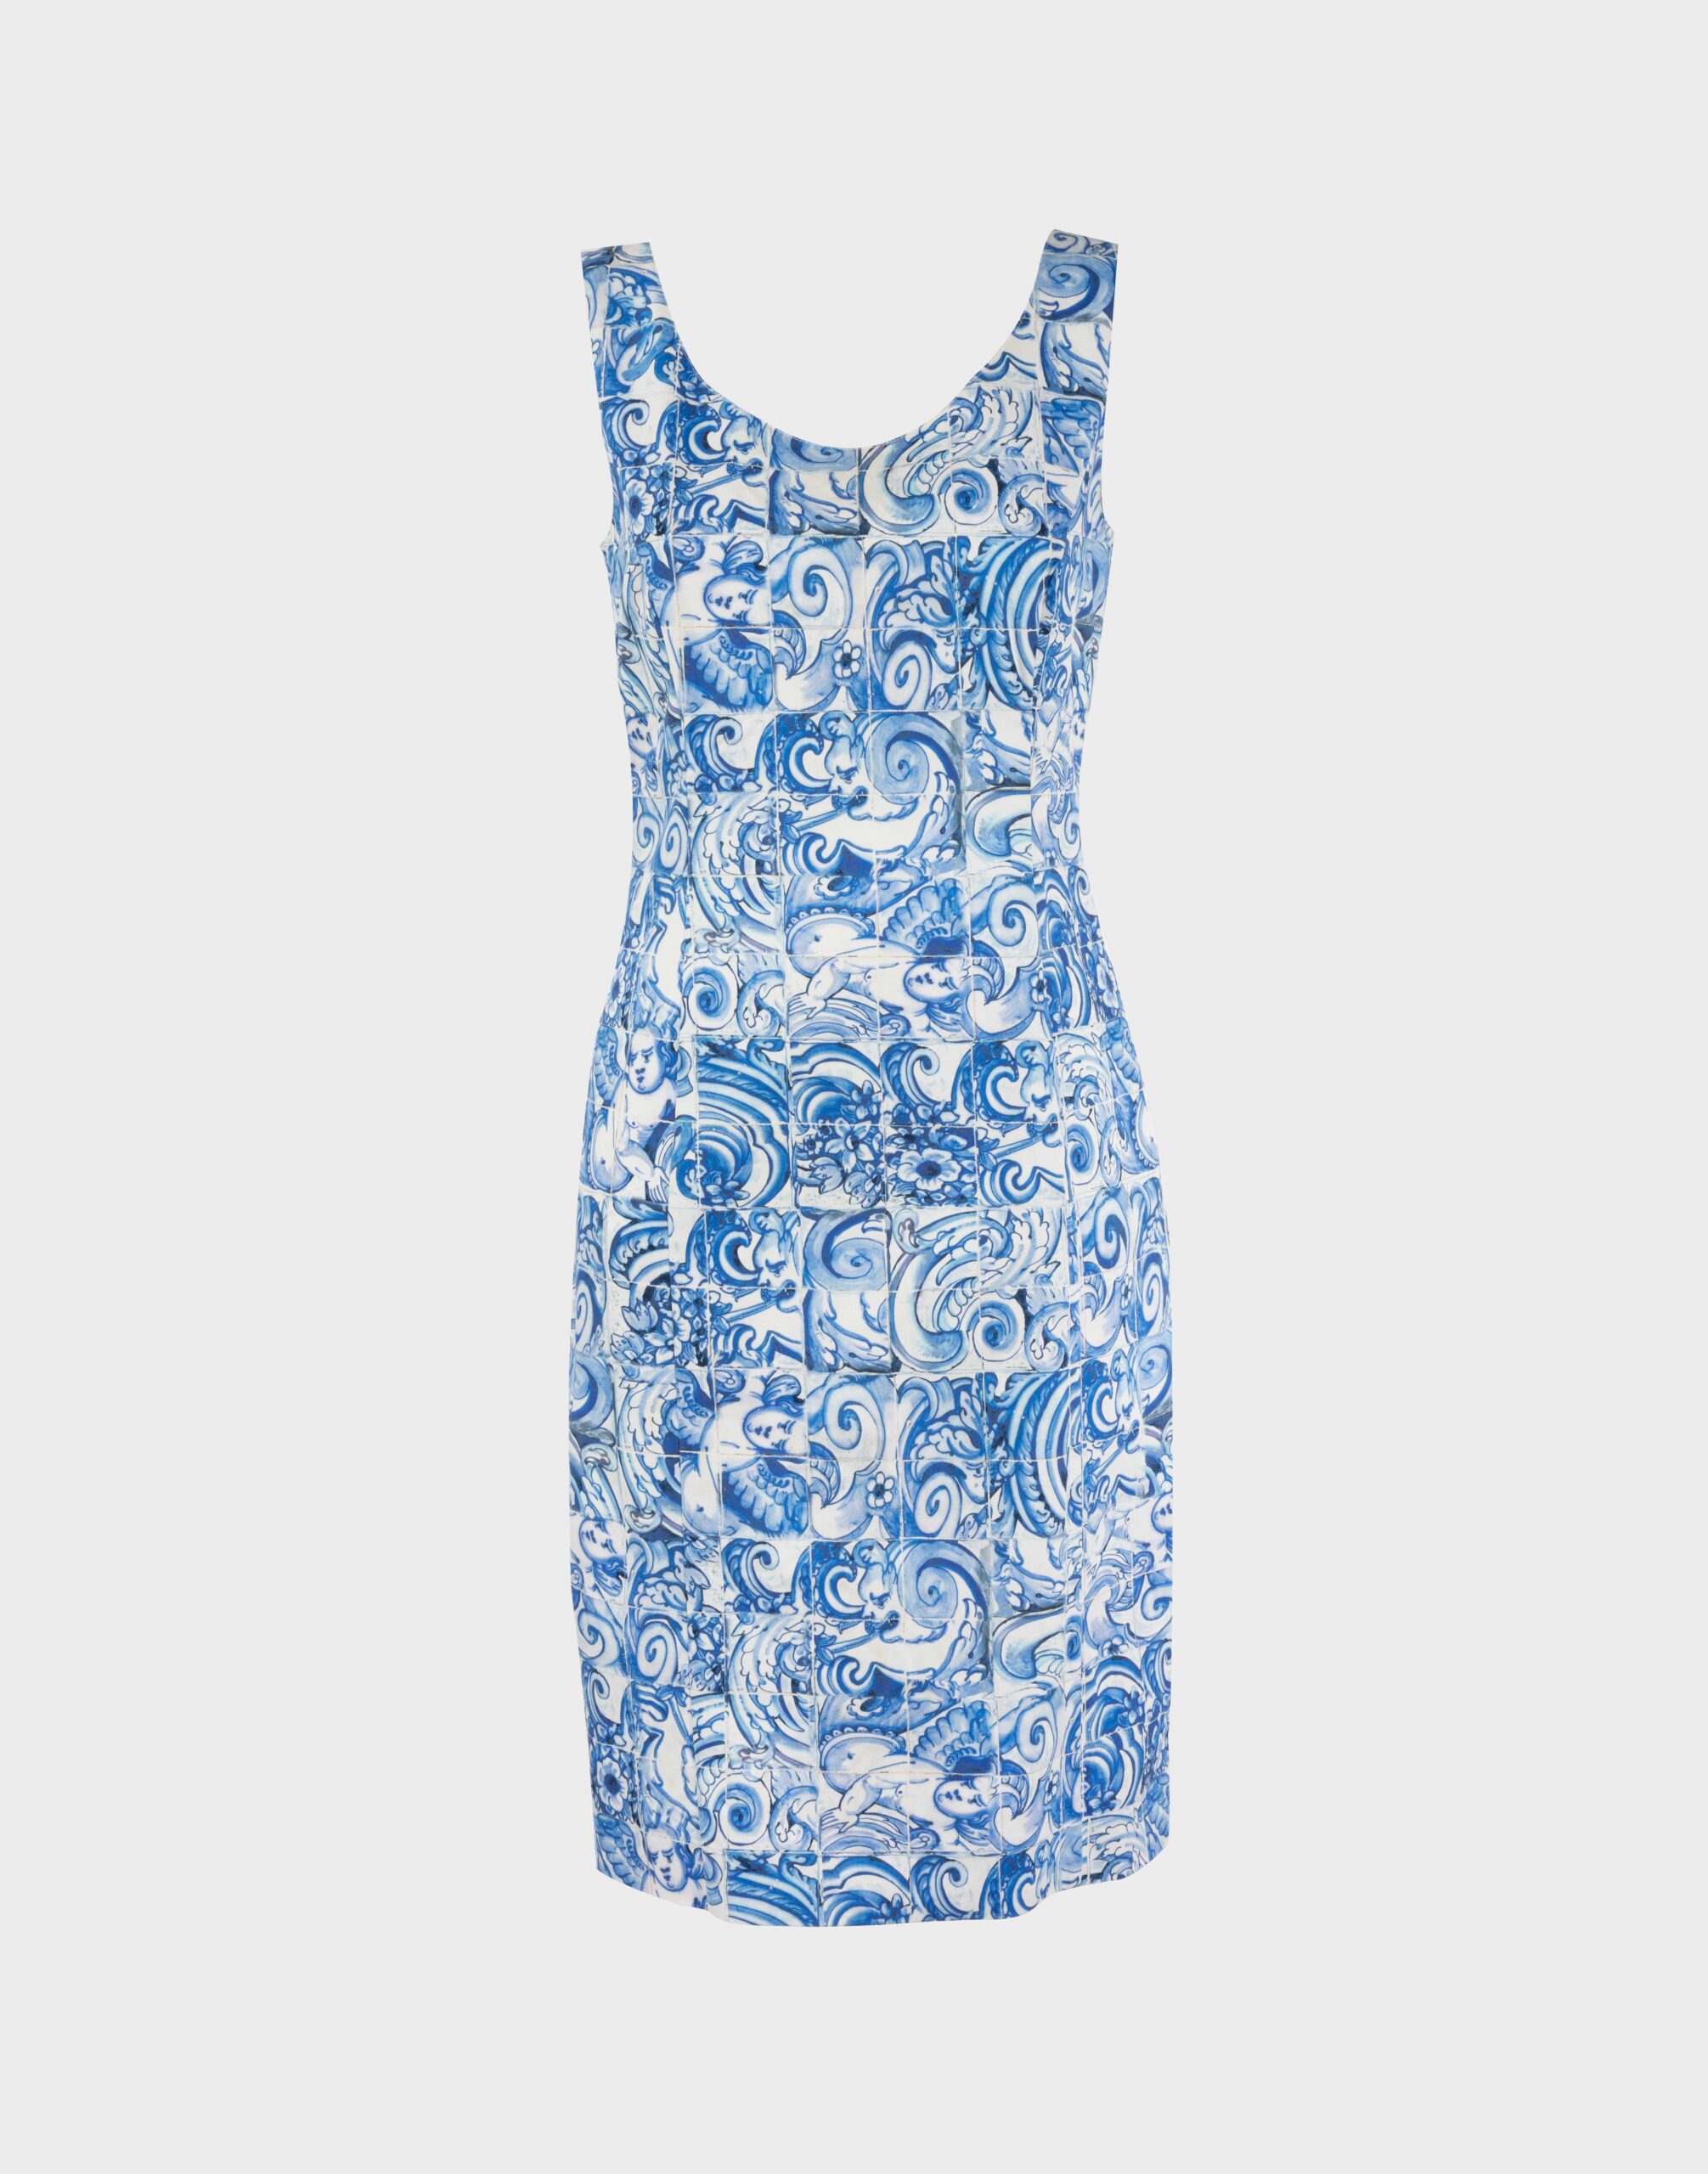 Women's sleeveless summer dress with mosaic pattern by Prada